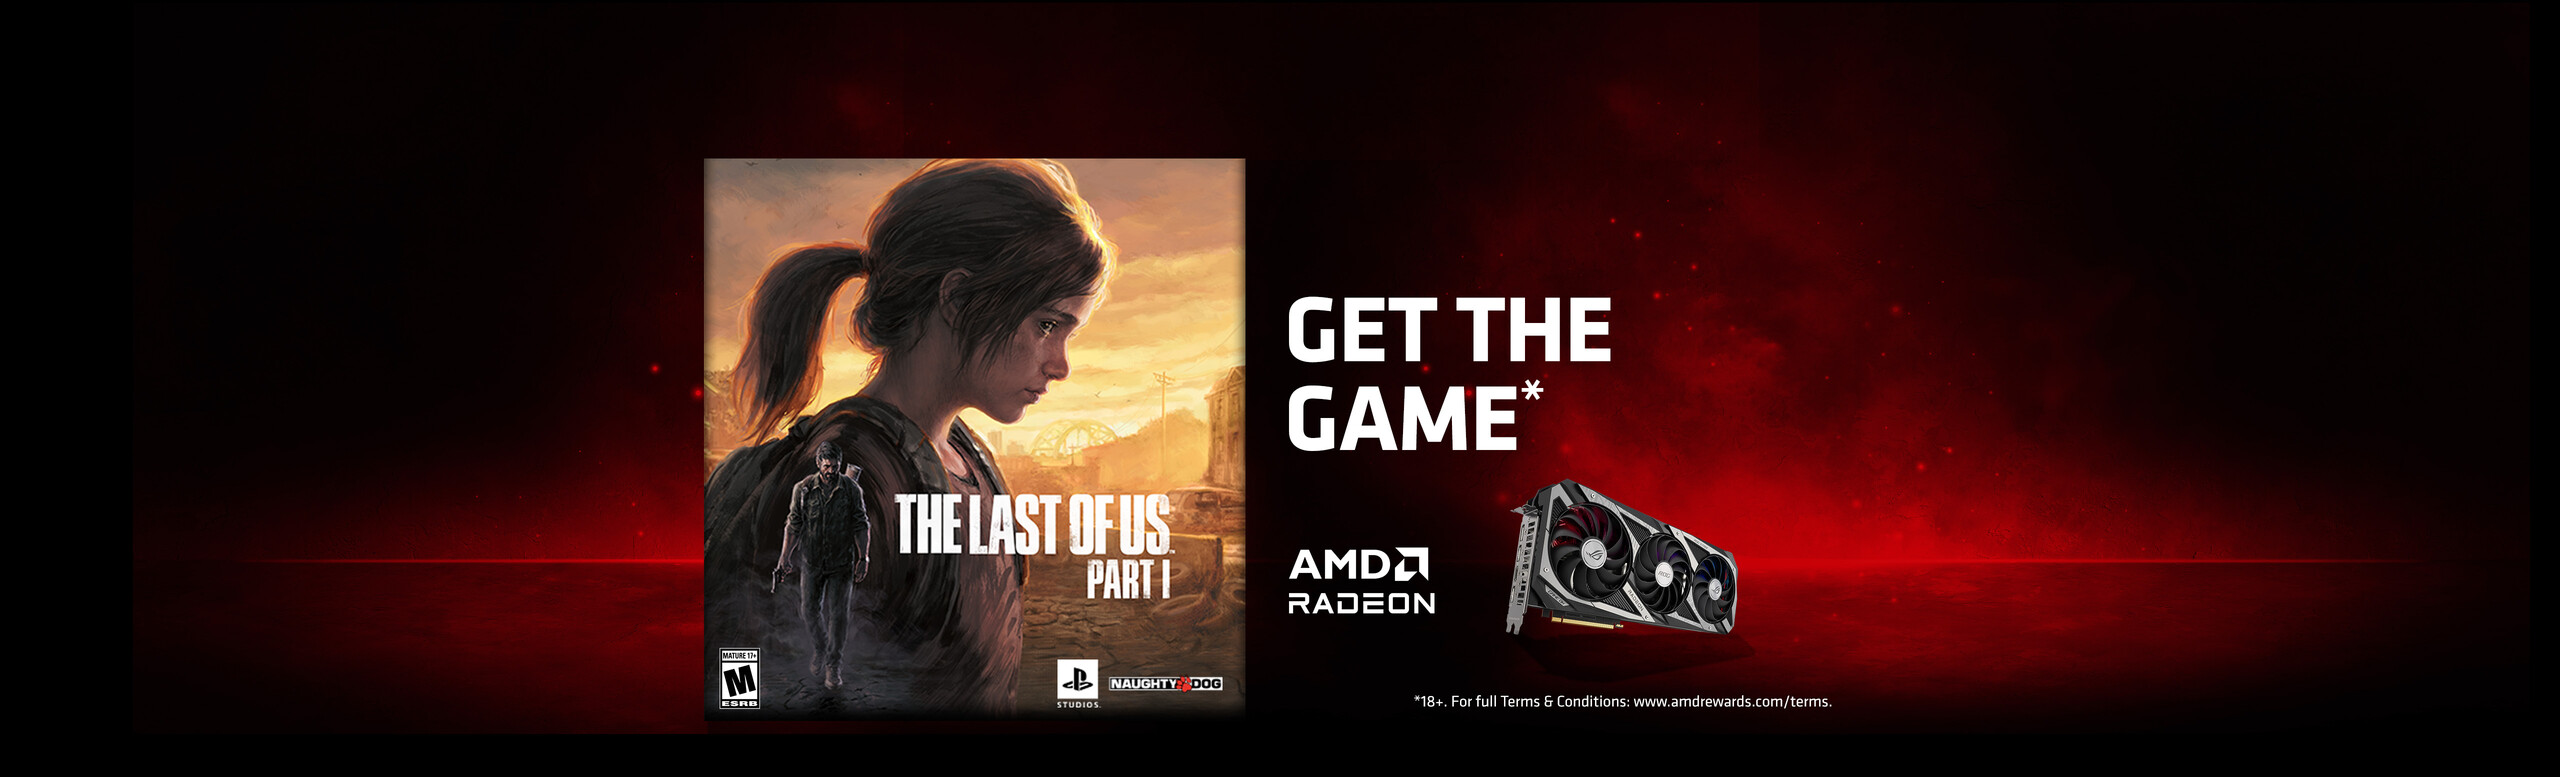 AMD Last of Us game bundle banner